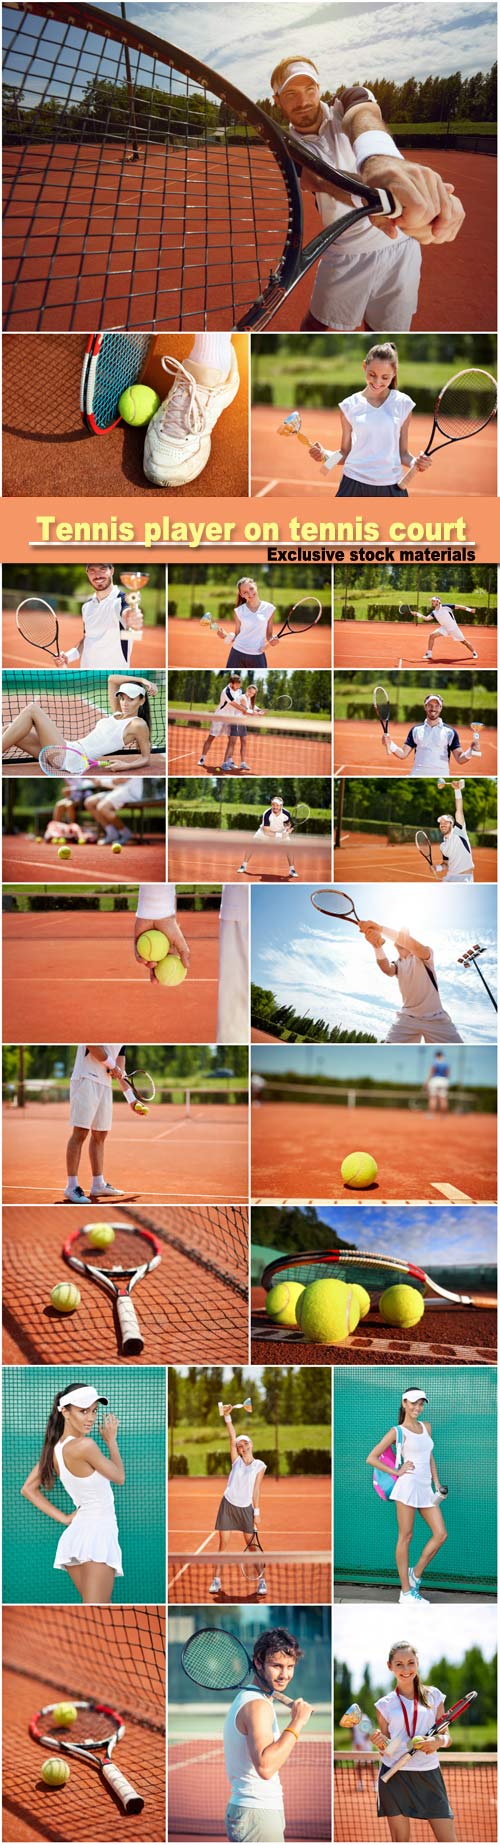 Tennis player on tennis court